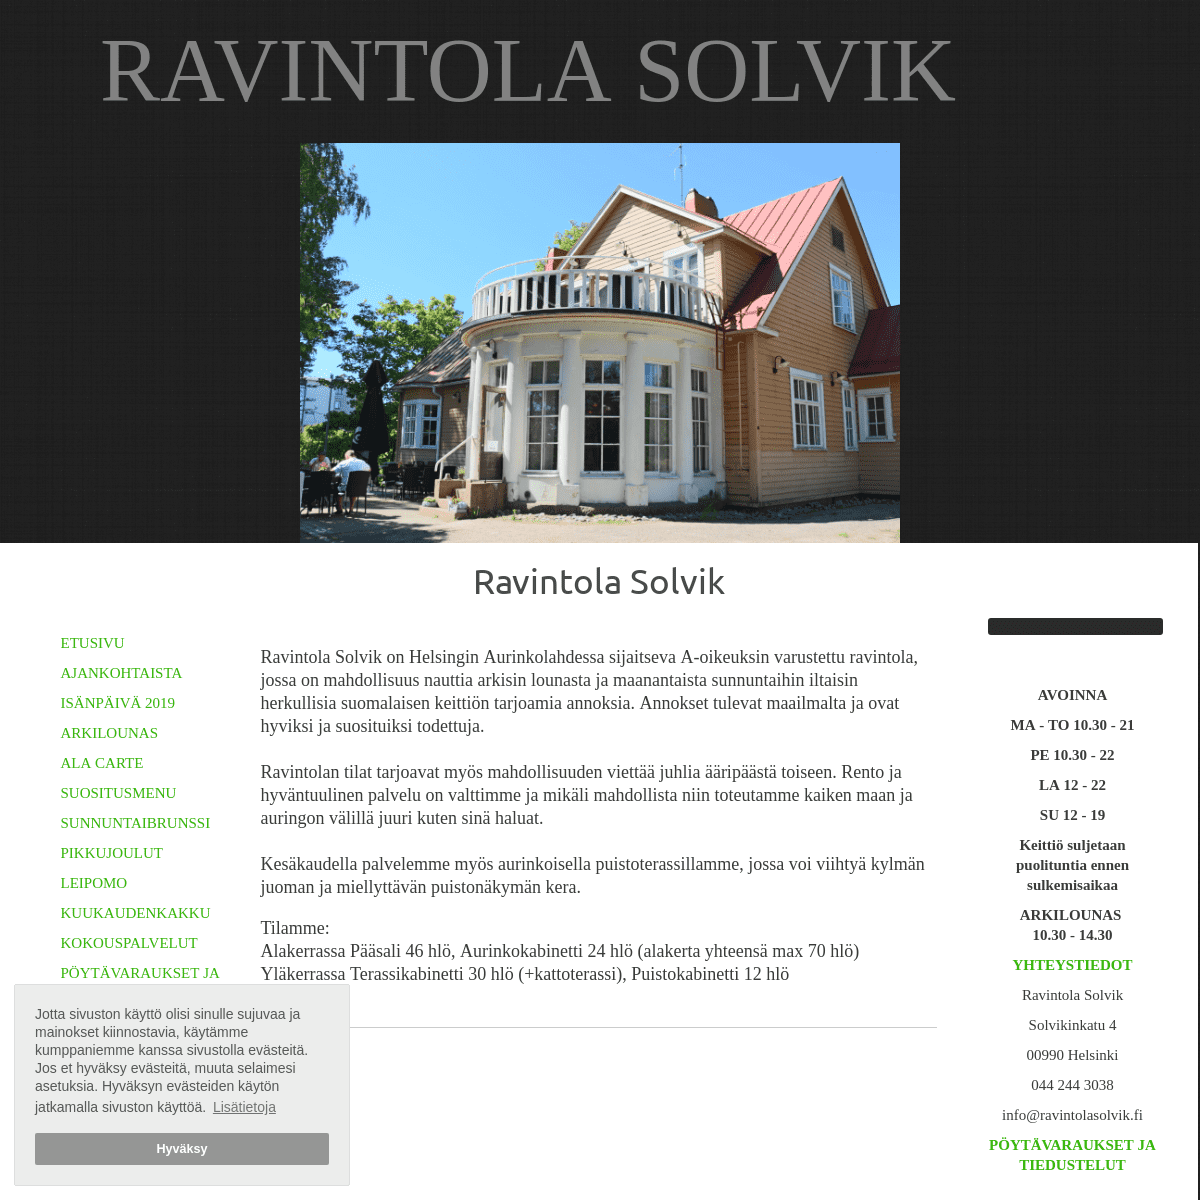 A complete backup of ravintolasolvik.fi